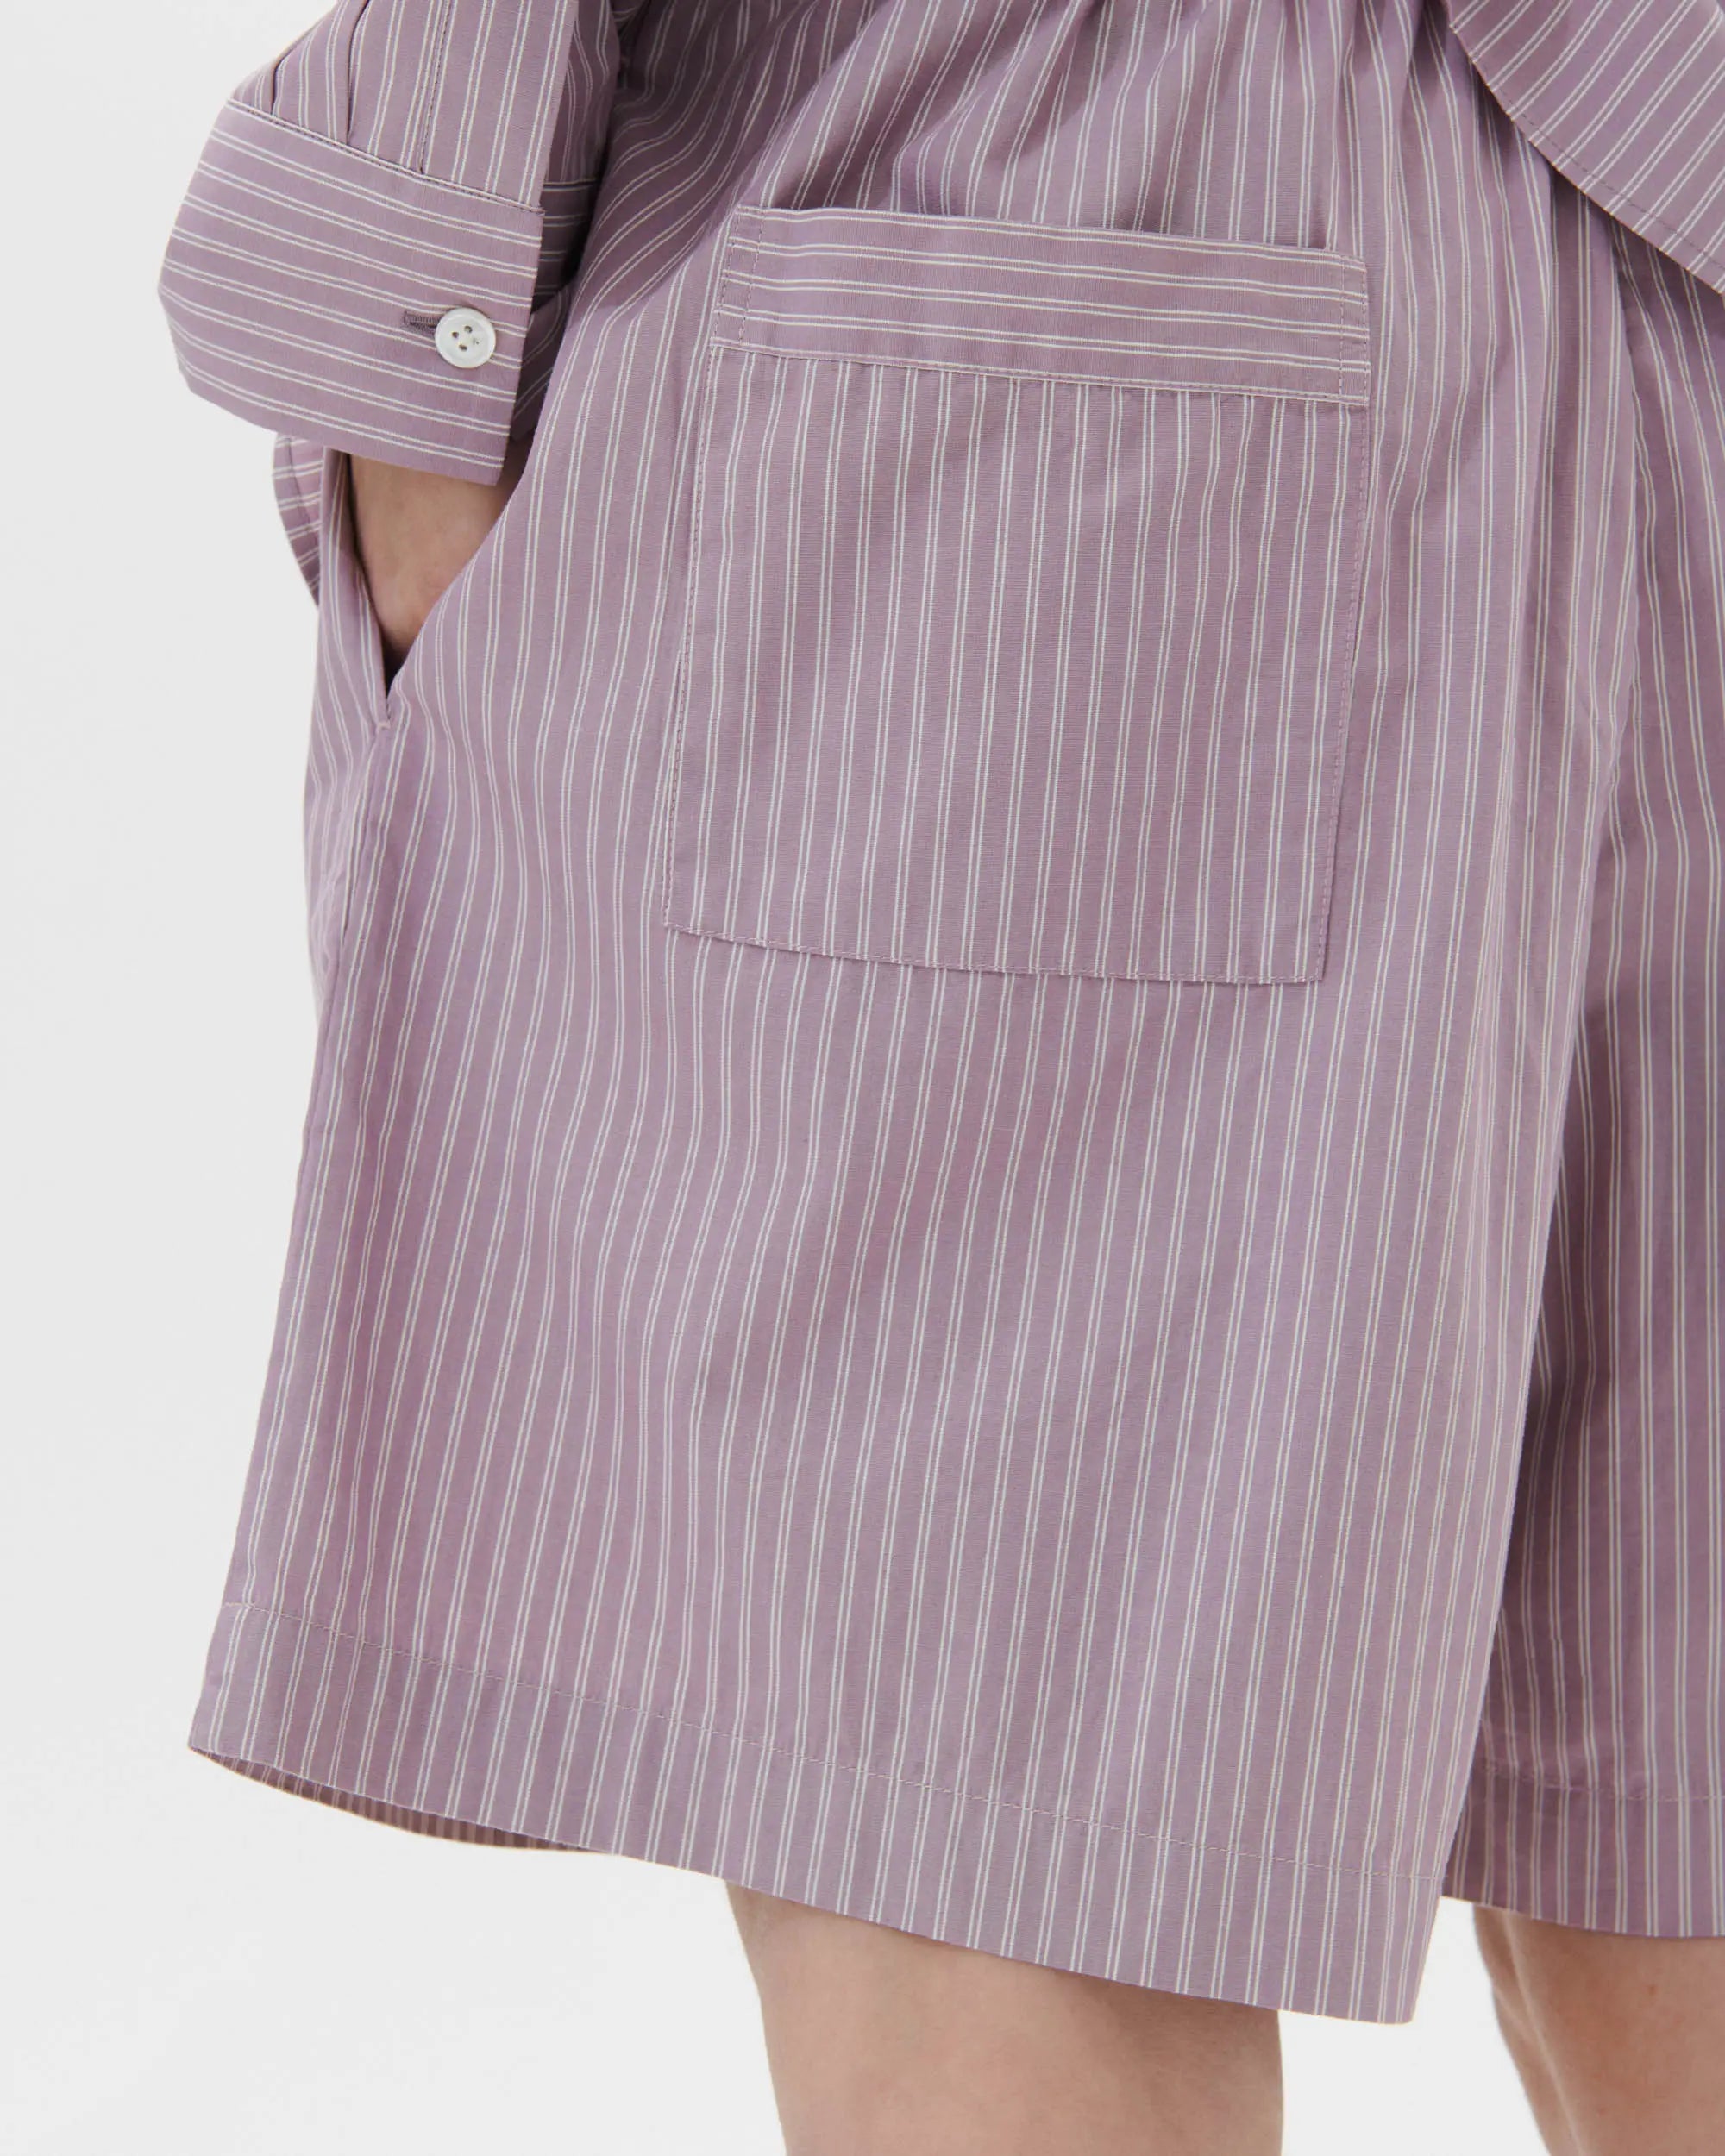 Tekla x Birkenstock Cotton Shorts - Mauve Stripes